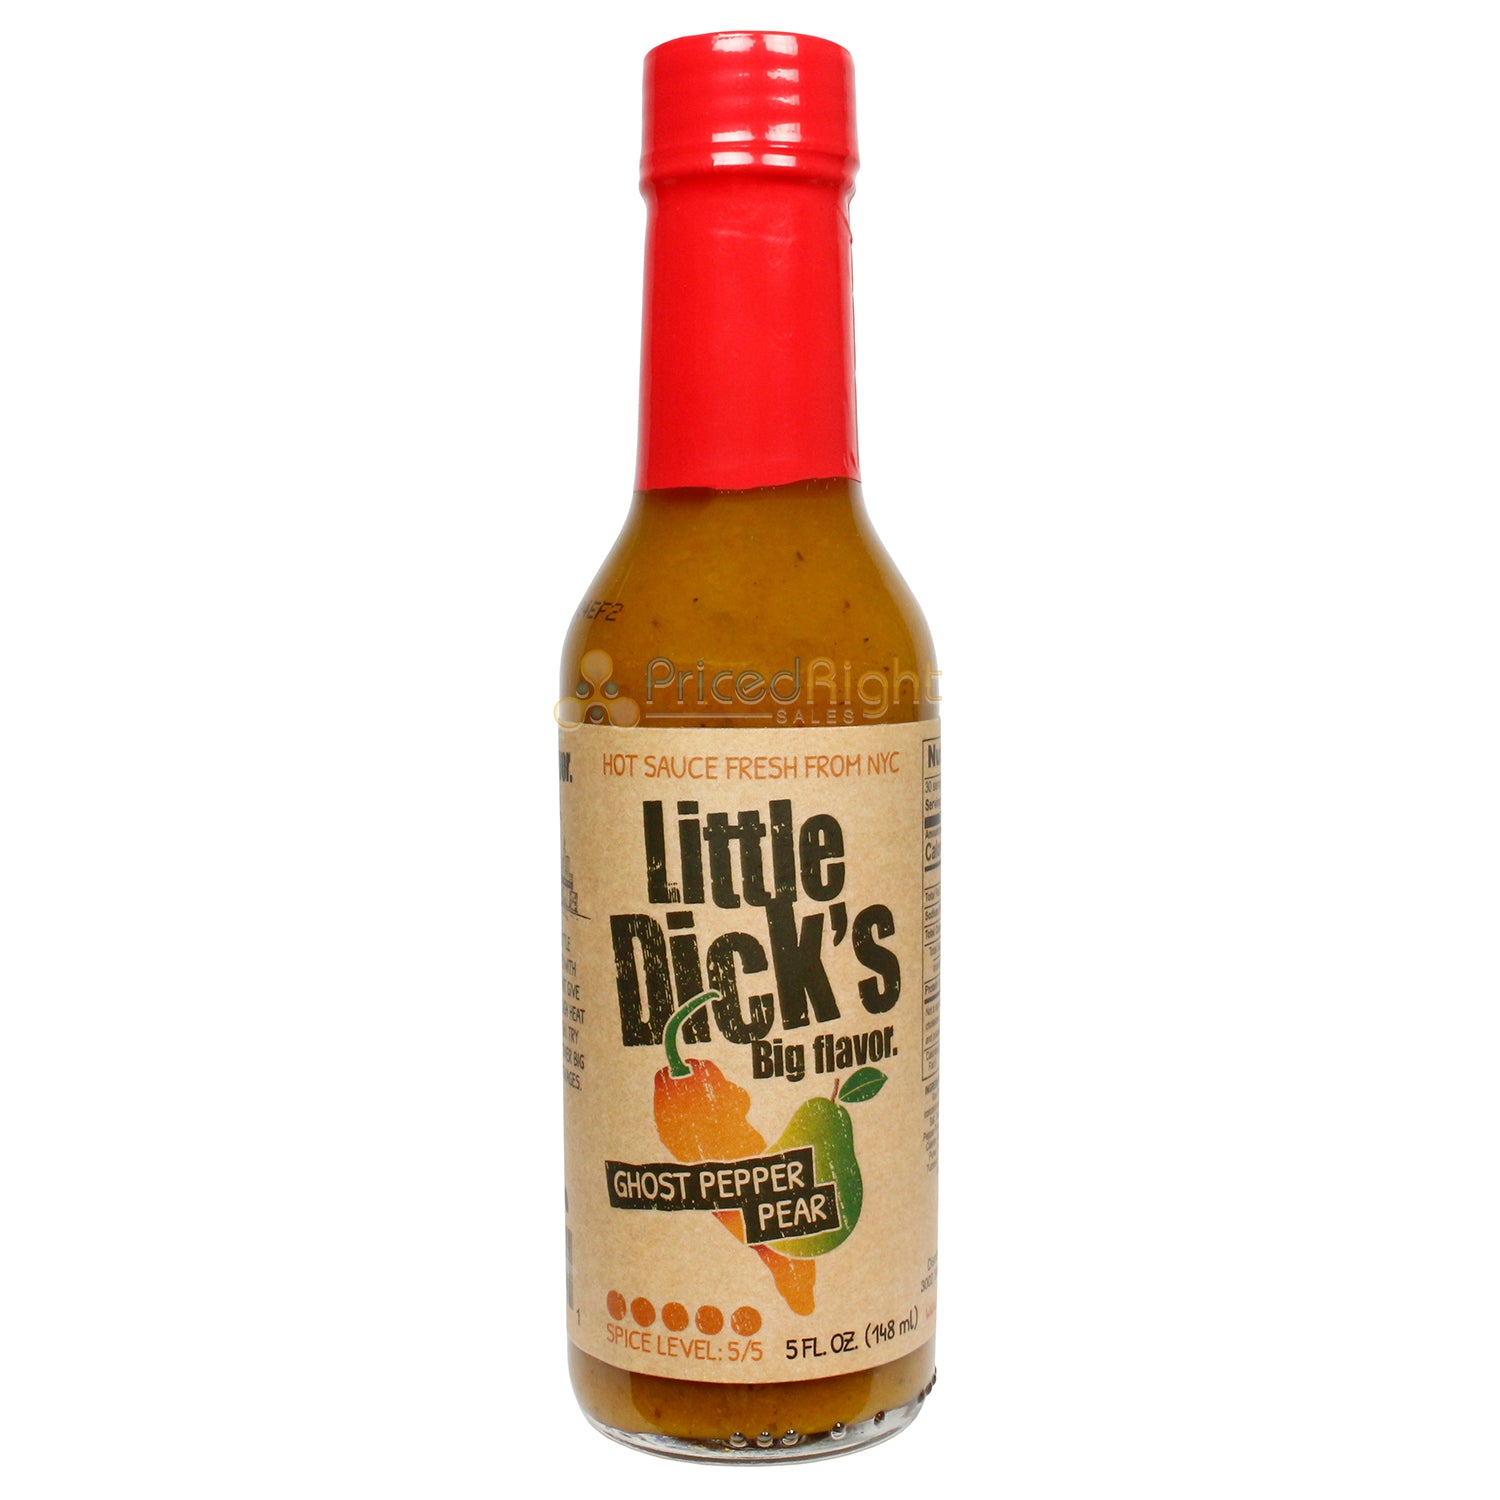 Little Dick's Ghost Pepper Pear Hot Sauce Gluten Free Spicy Small Batch 5 Fl Oz